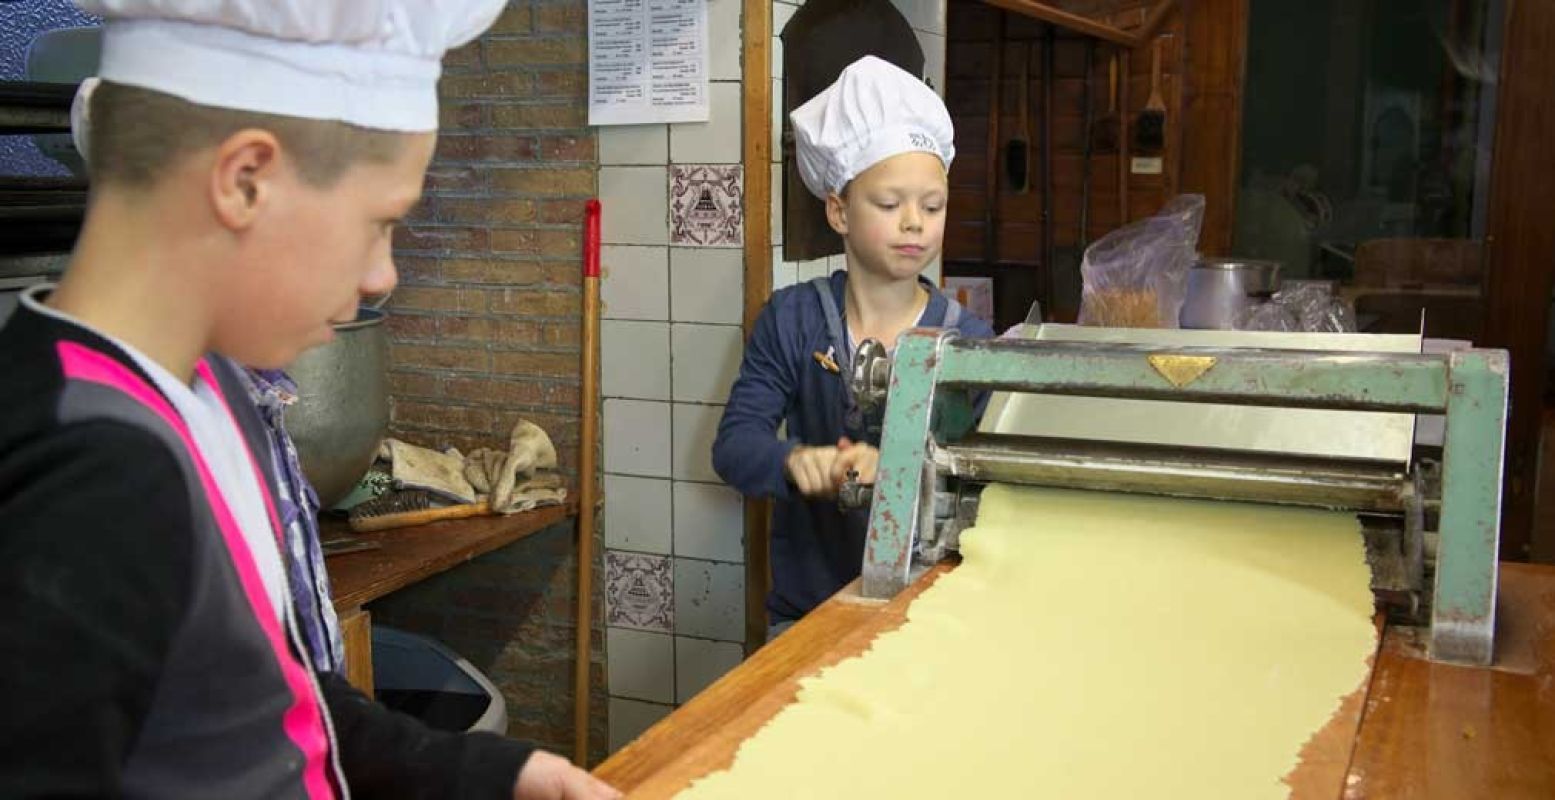 Bak je eigen brood in Bakkerijmuseum De Oude Bakkerij. Foto: De Oude Bakkerij.